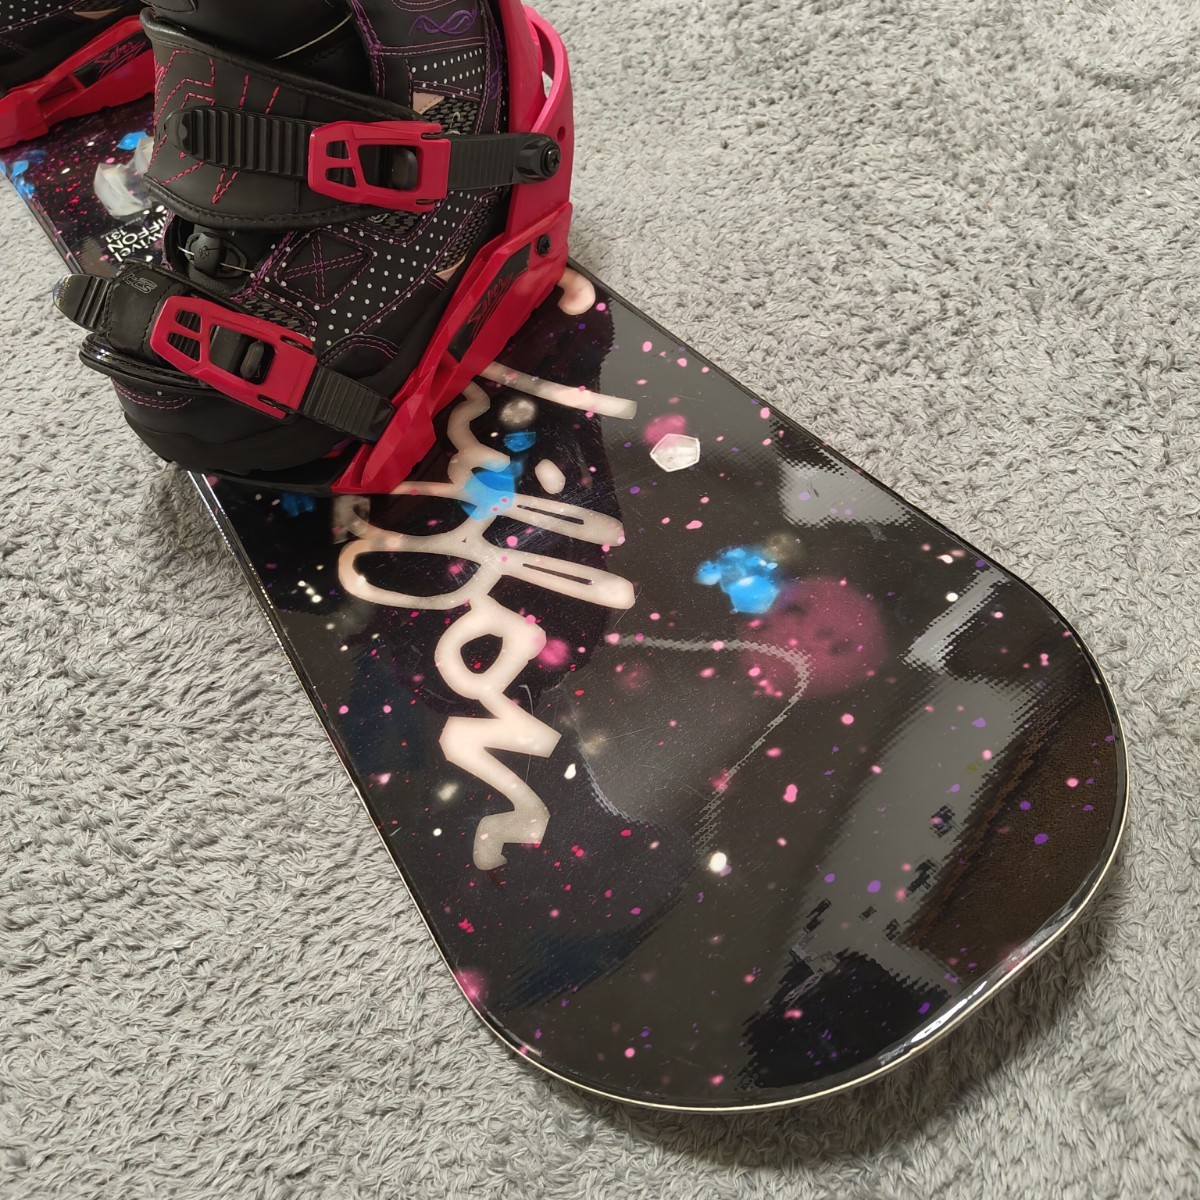  snowboard 131 swivel saver binding Boots lady's 